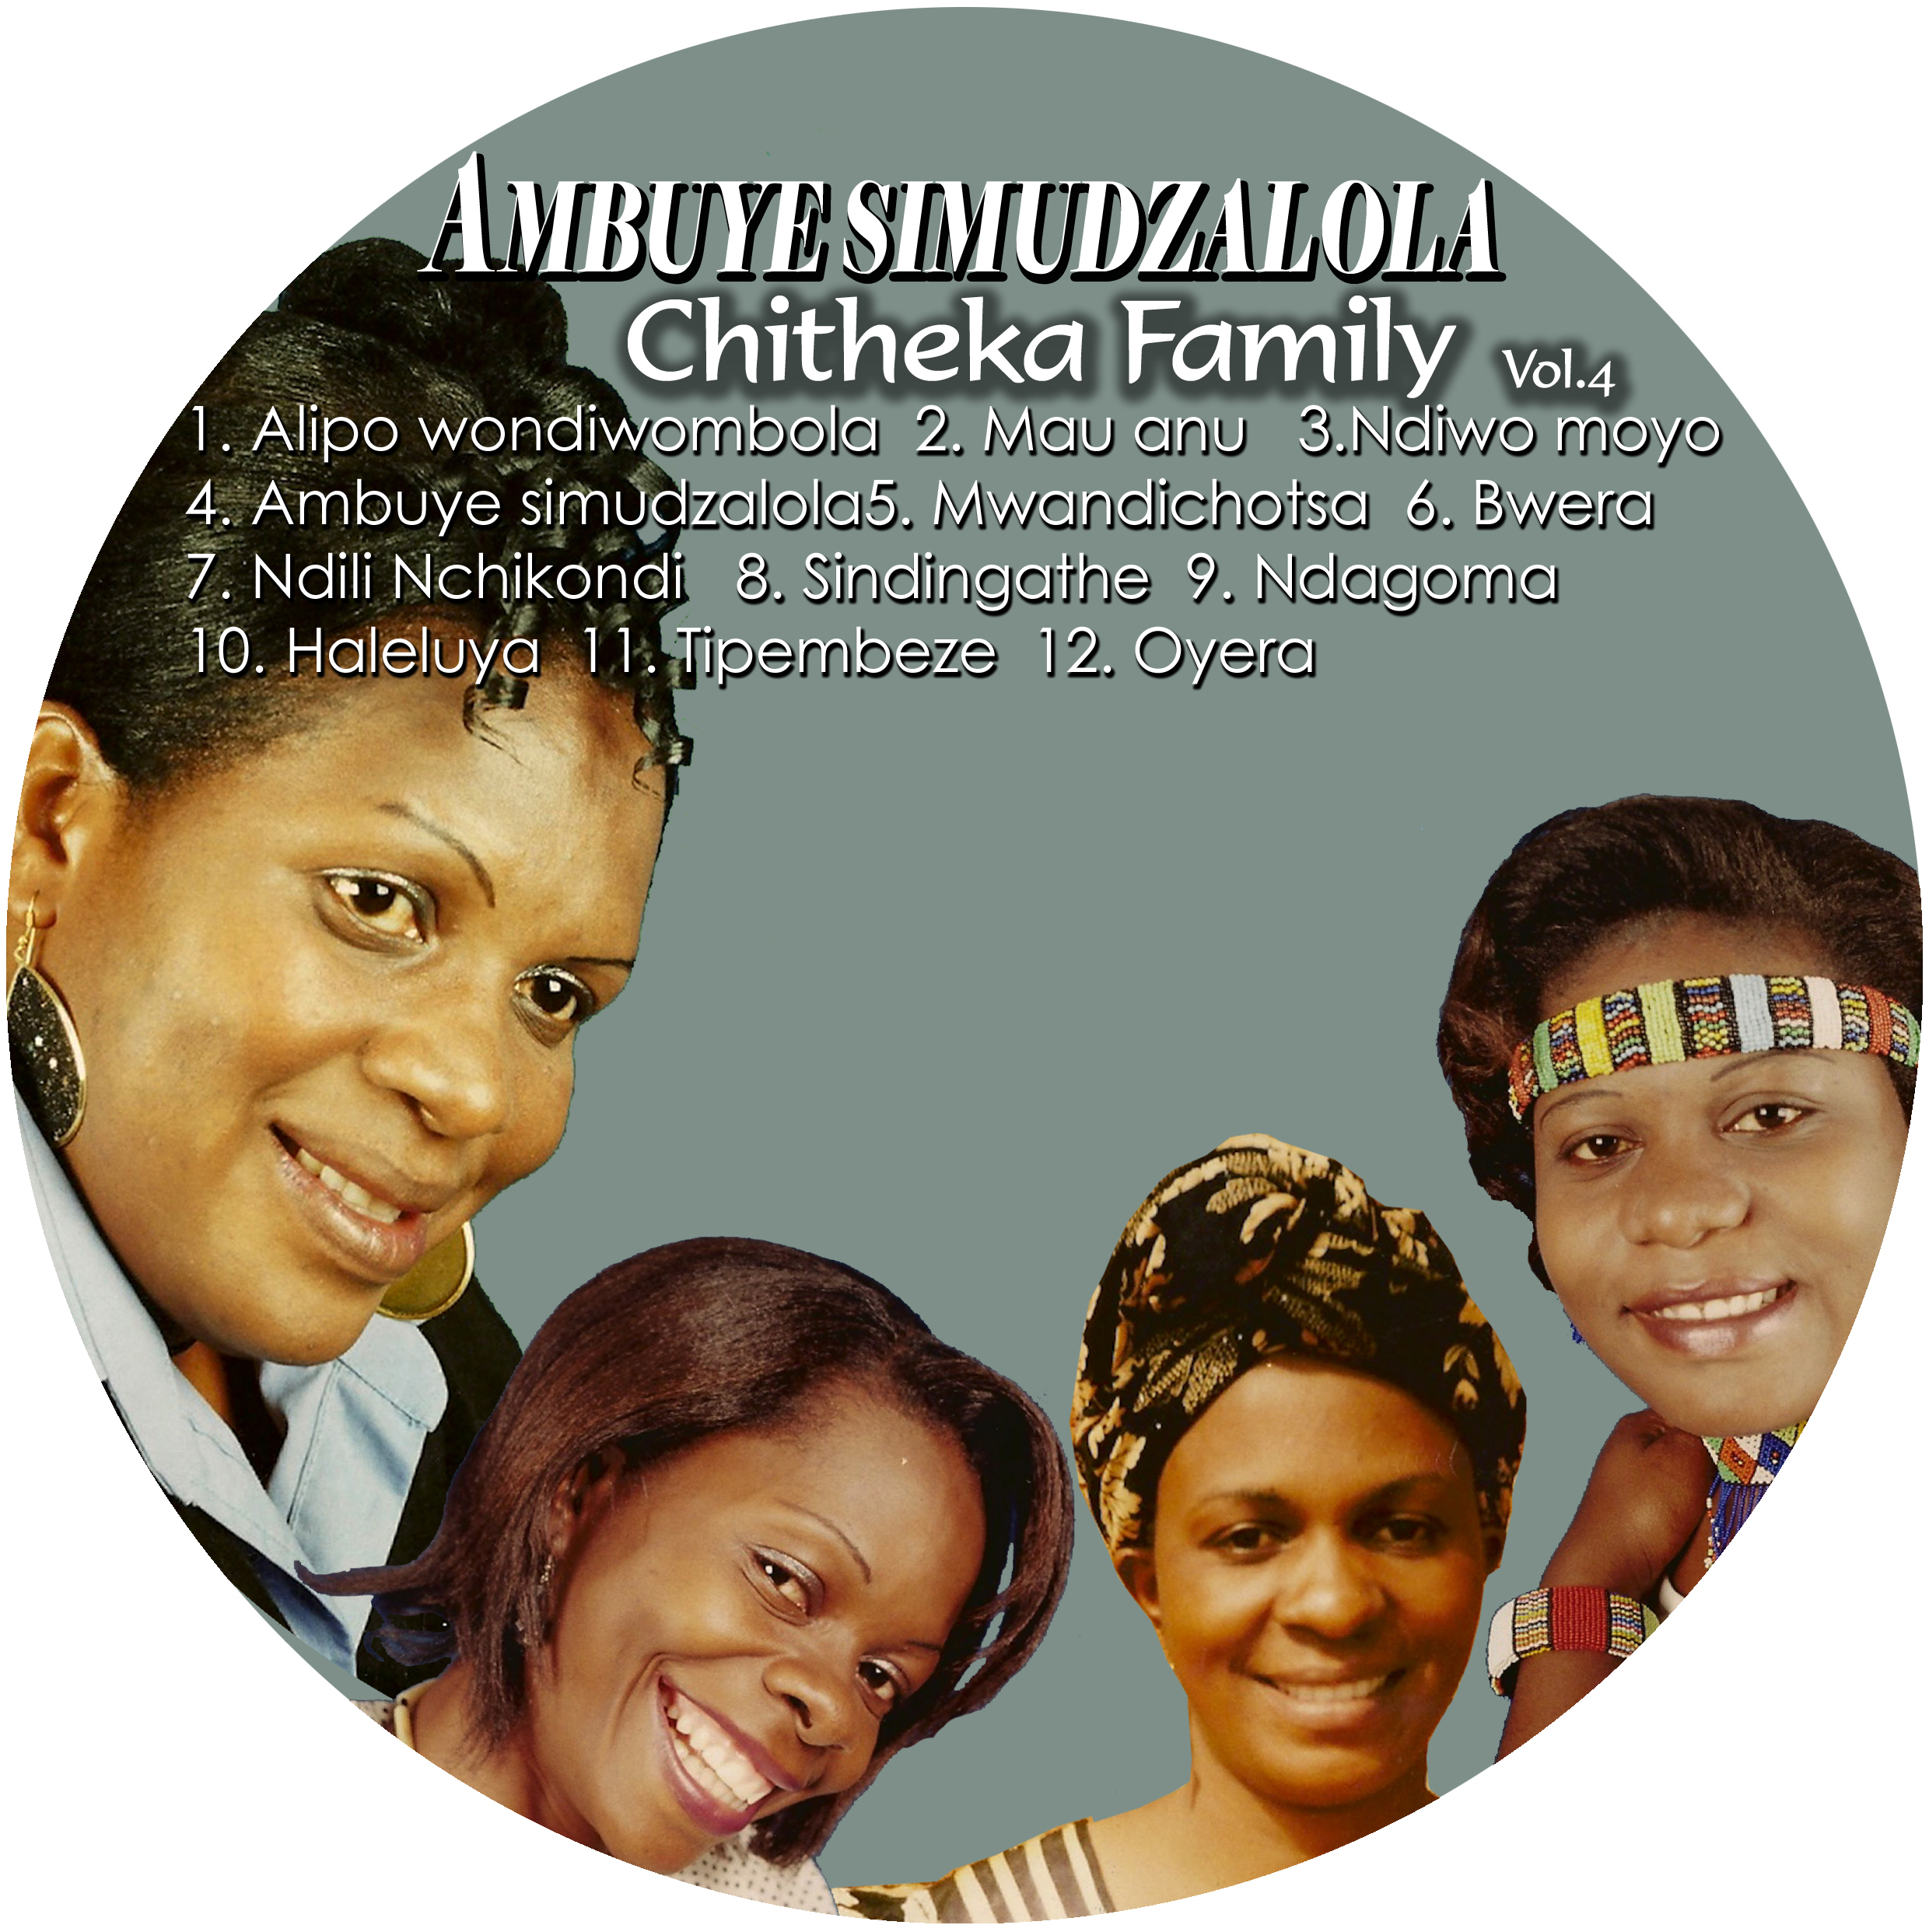 Chitheka Family - Vol 4. Ambuye Simudzalola Album